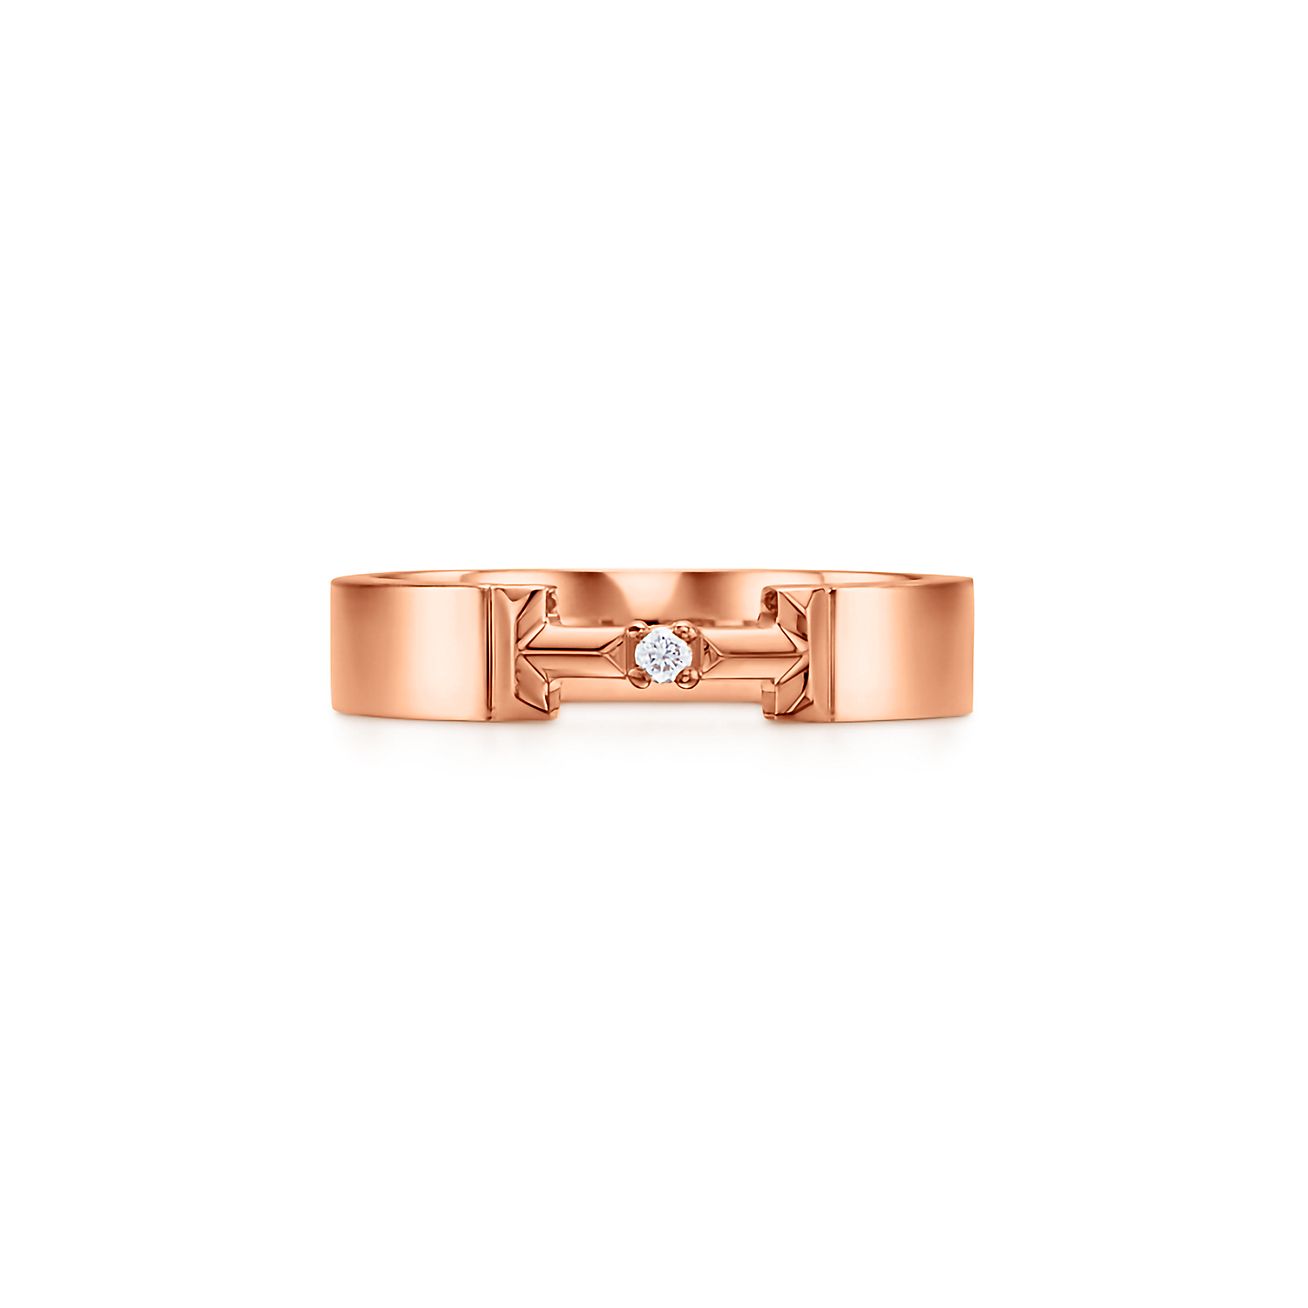 Tiffany T True diamond link ring in 18k rose gold, 4 mm wide. | Tiffany ...